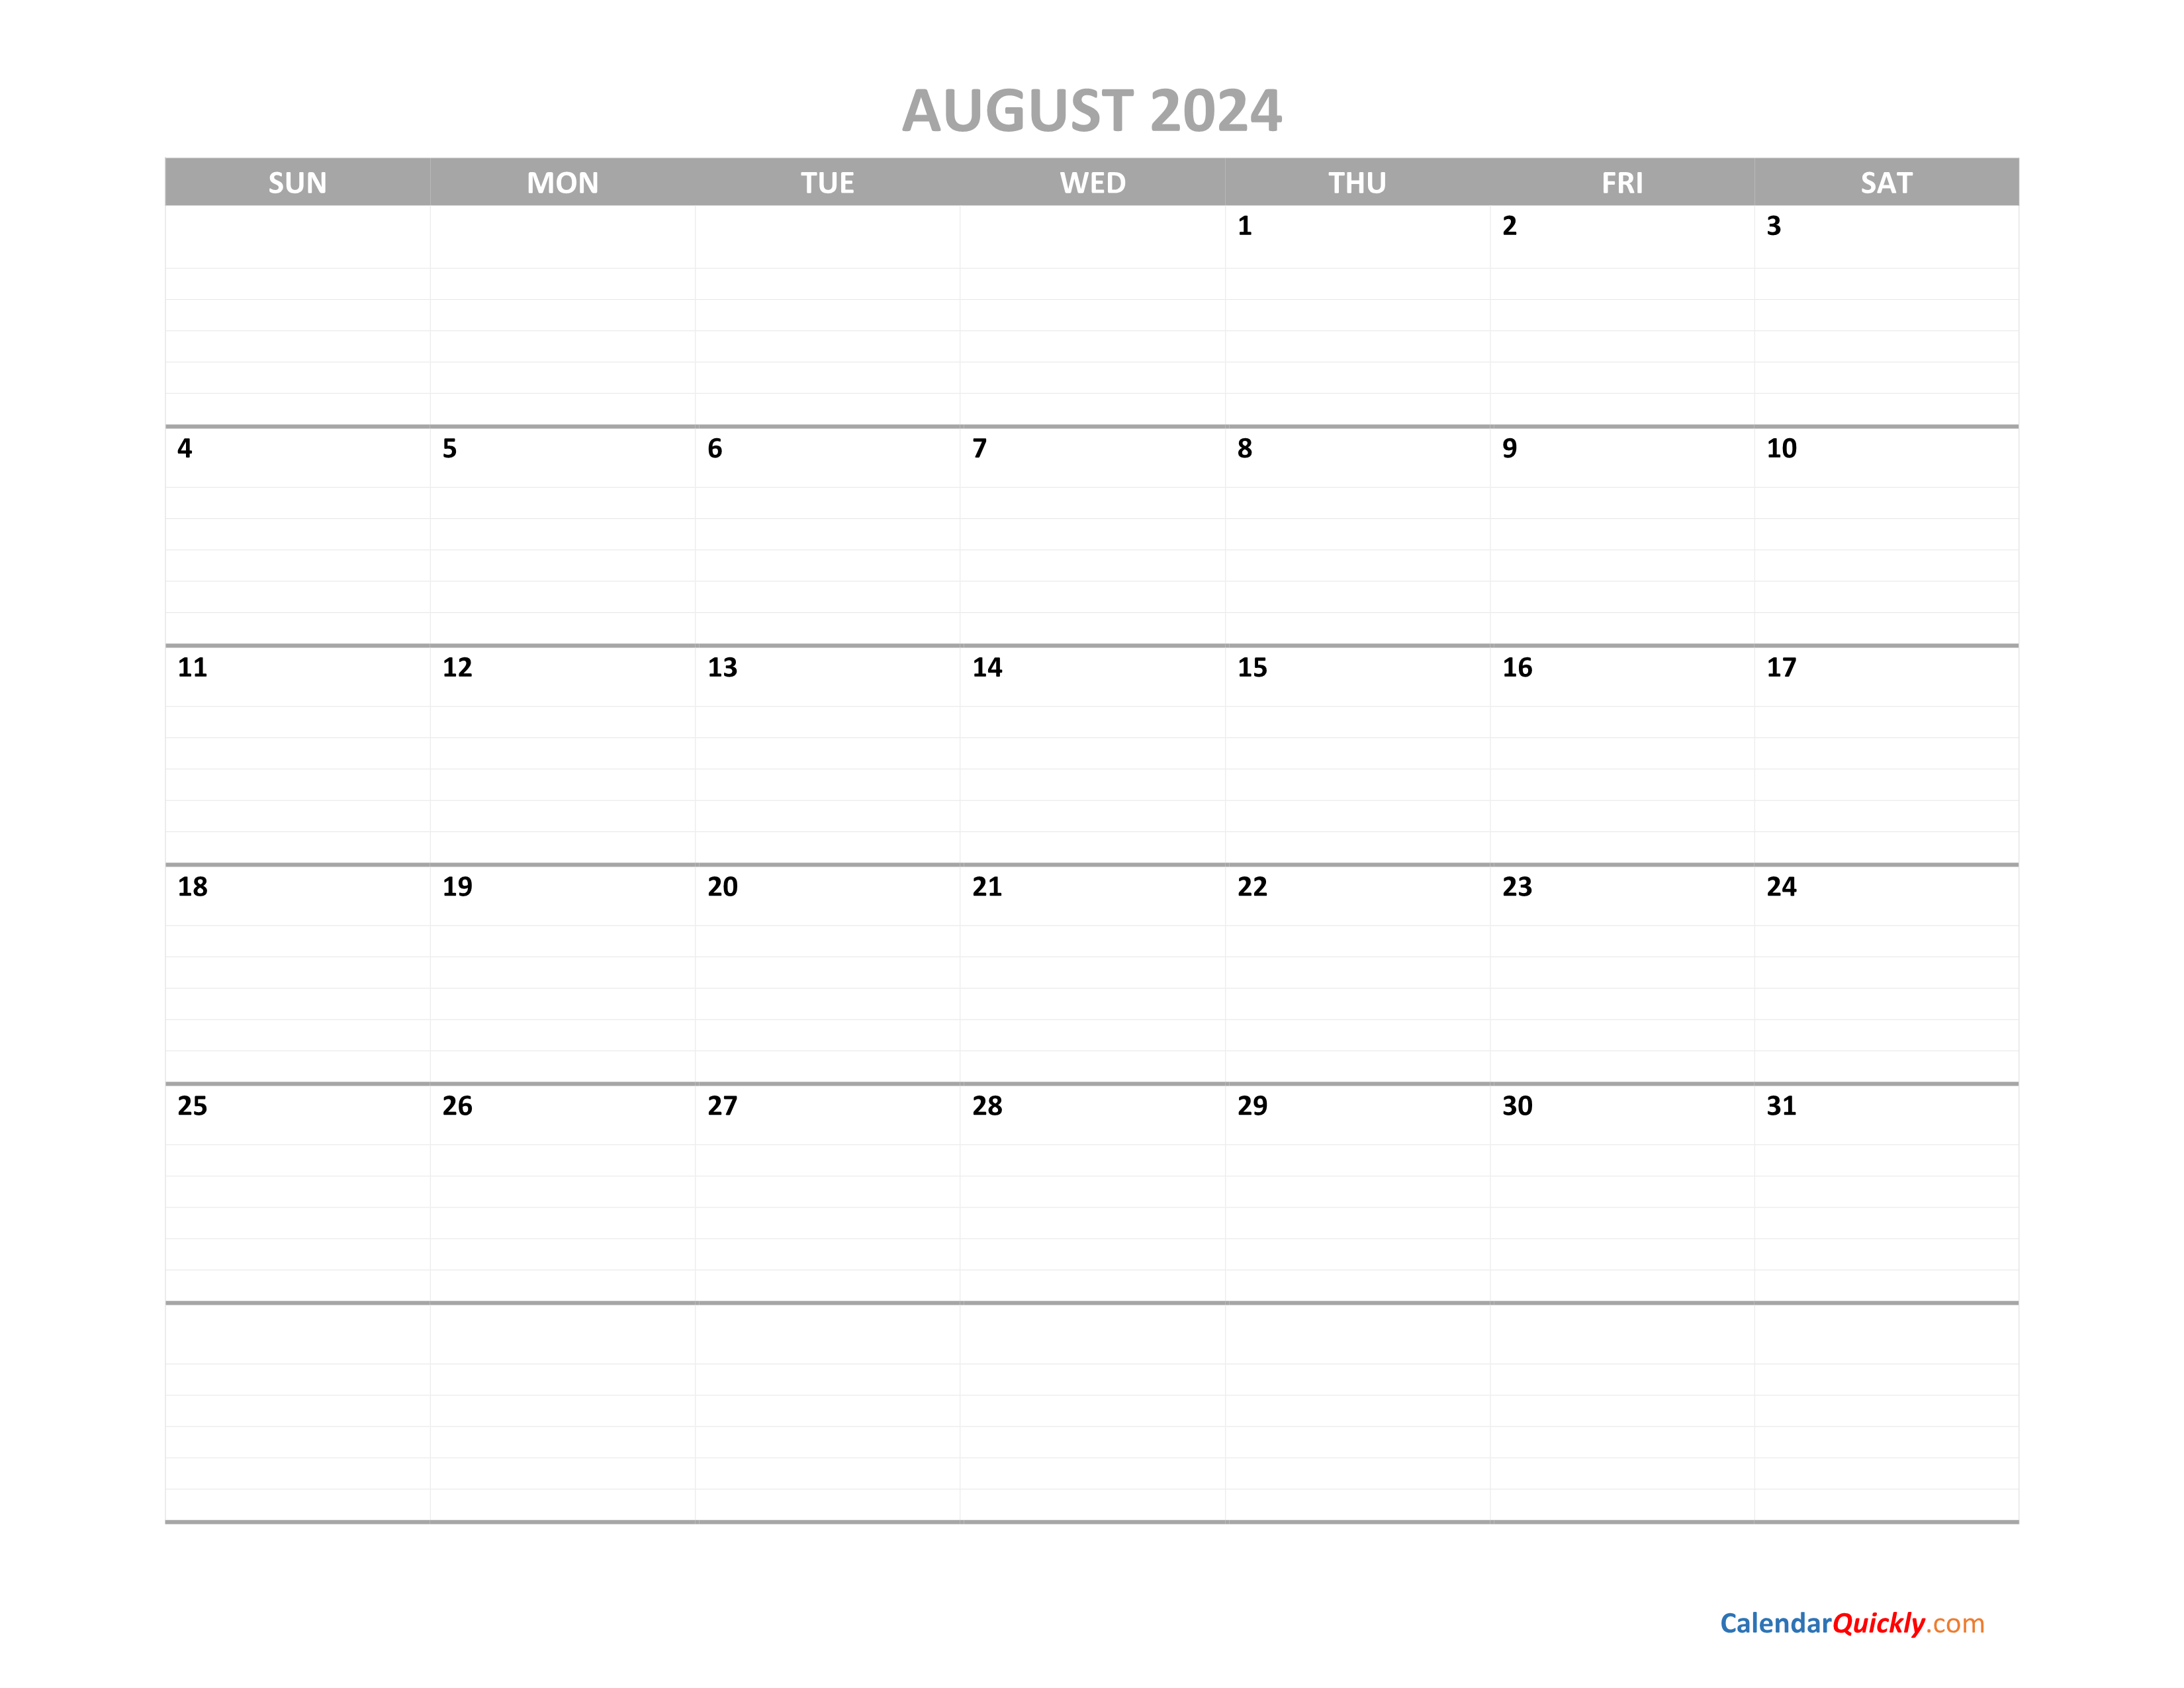 august-calendar-2024-printable-calendar-quickly